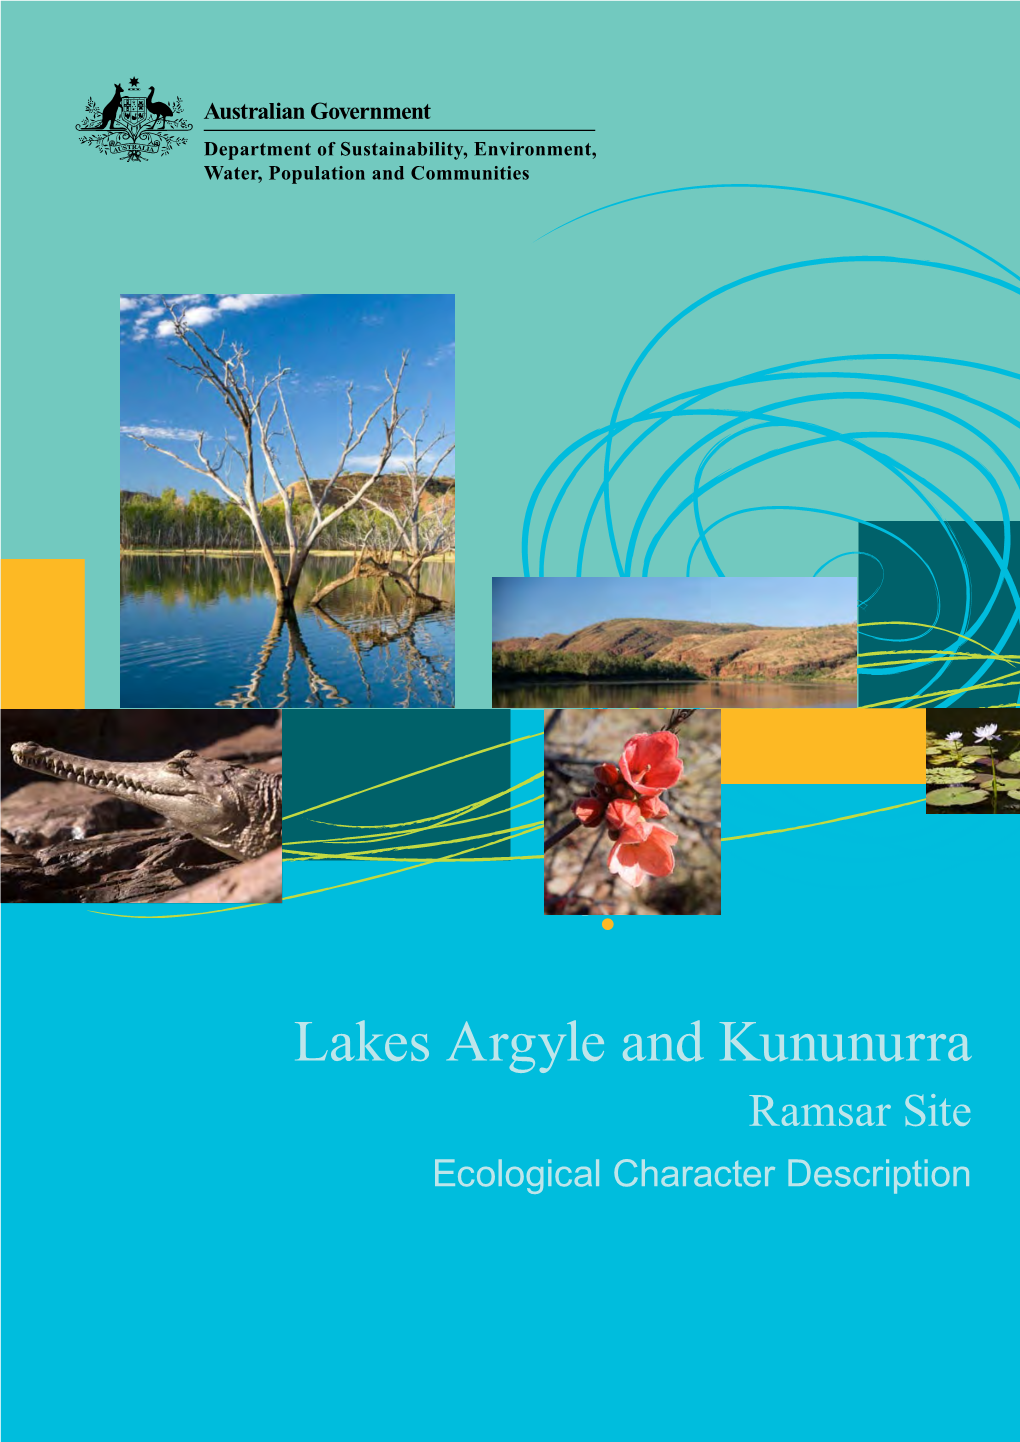 Lakes Argyle and Kununurra Wetlands Ramsar Site Ecological Character Description